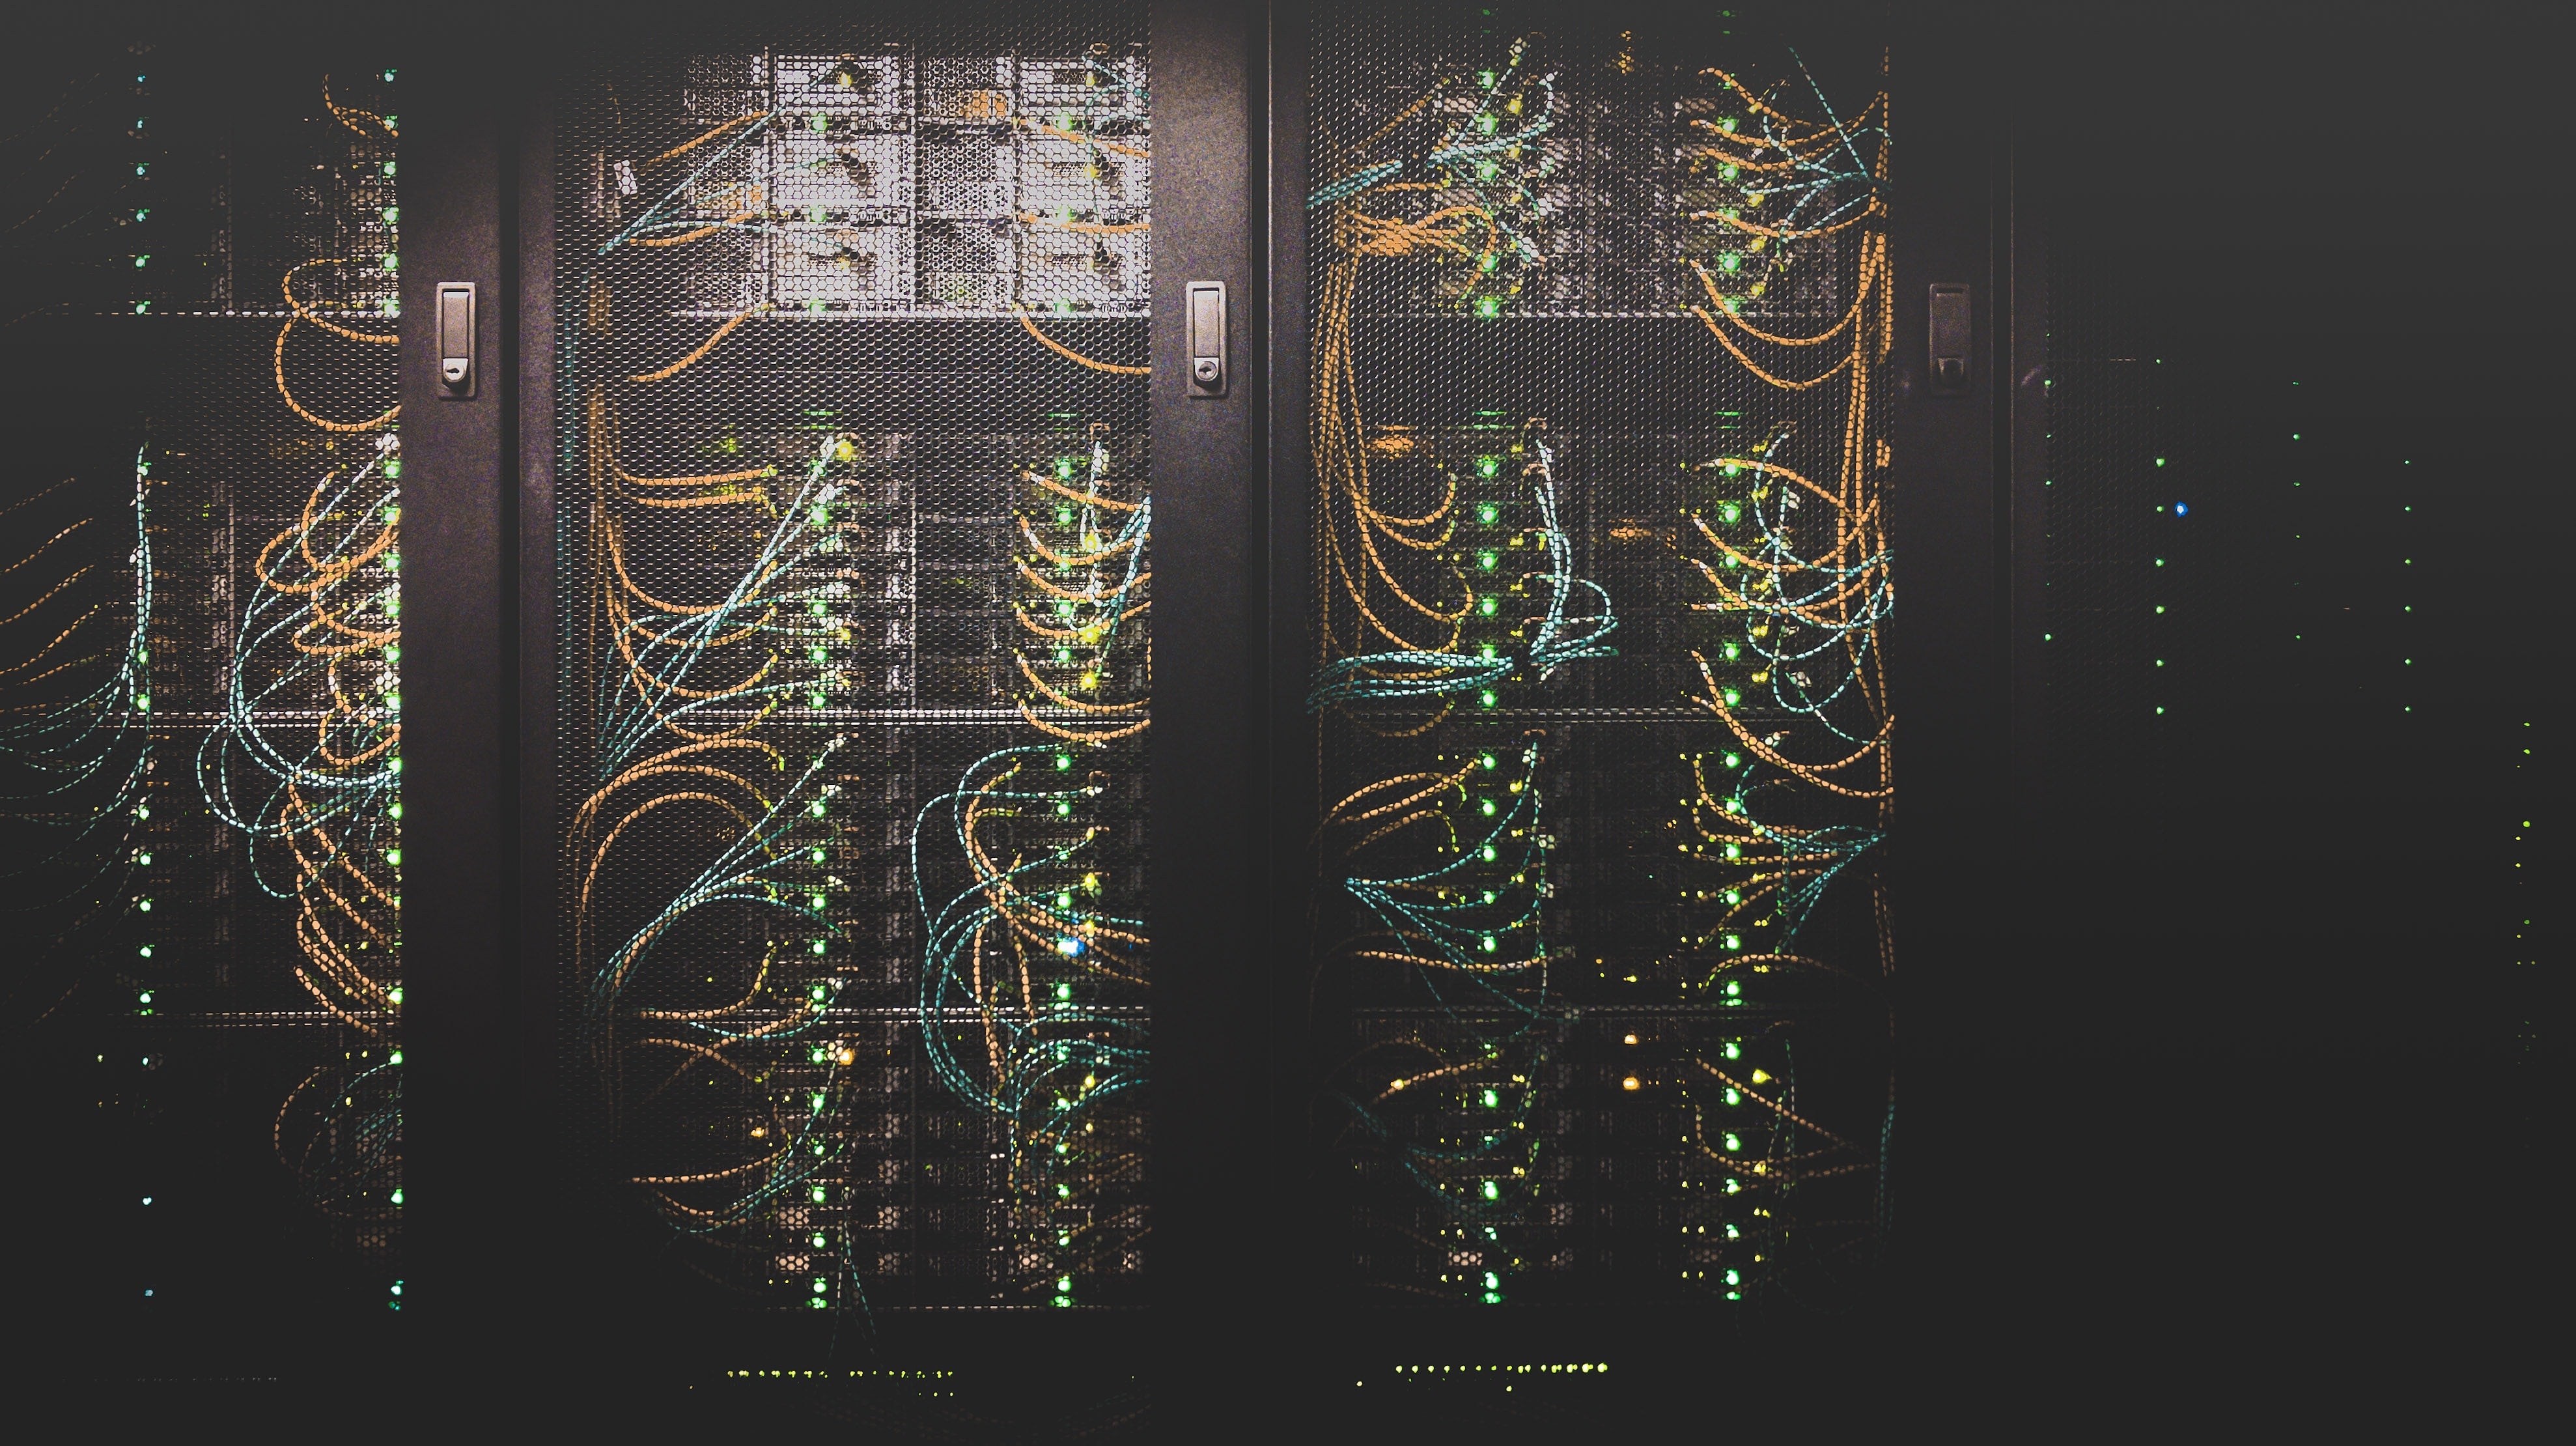 Multi-colored computer servers